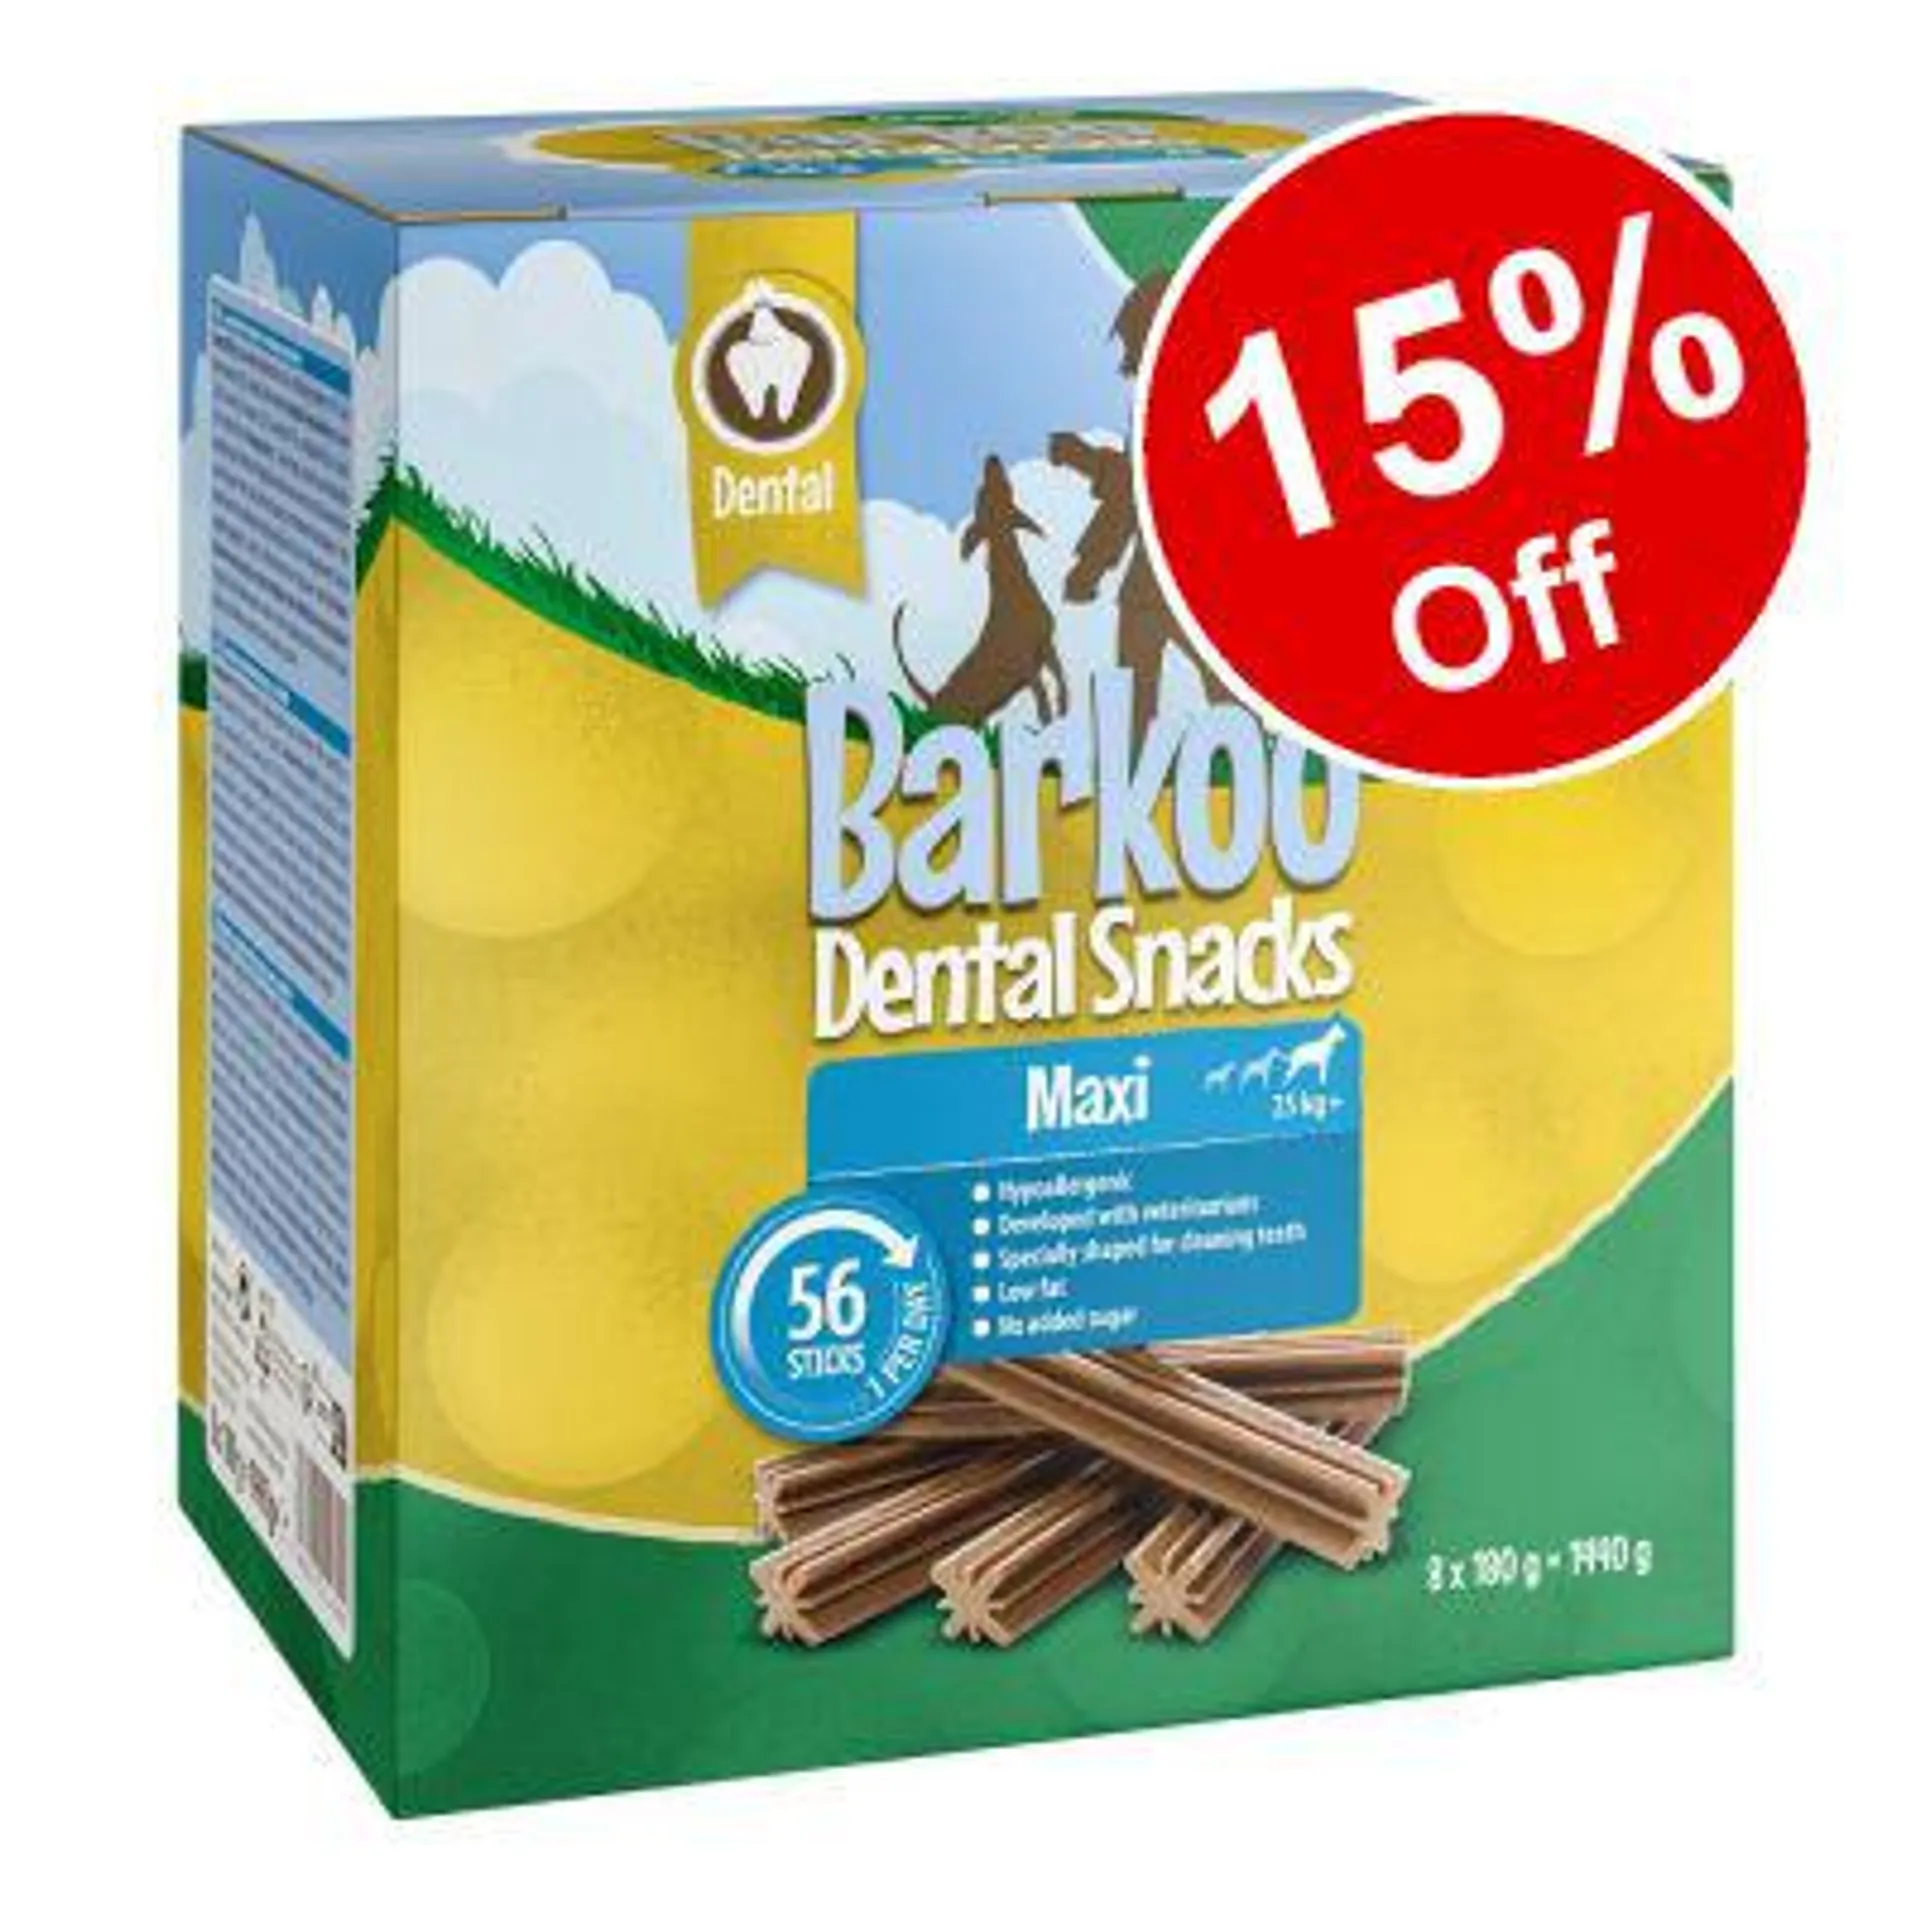 112 Barkoo Grain-Free Dental Dog Snacks - 15% Off!*